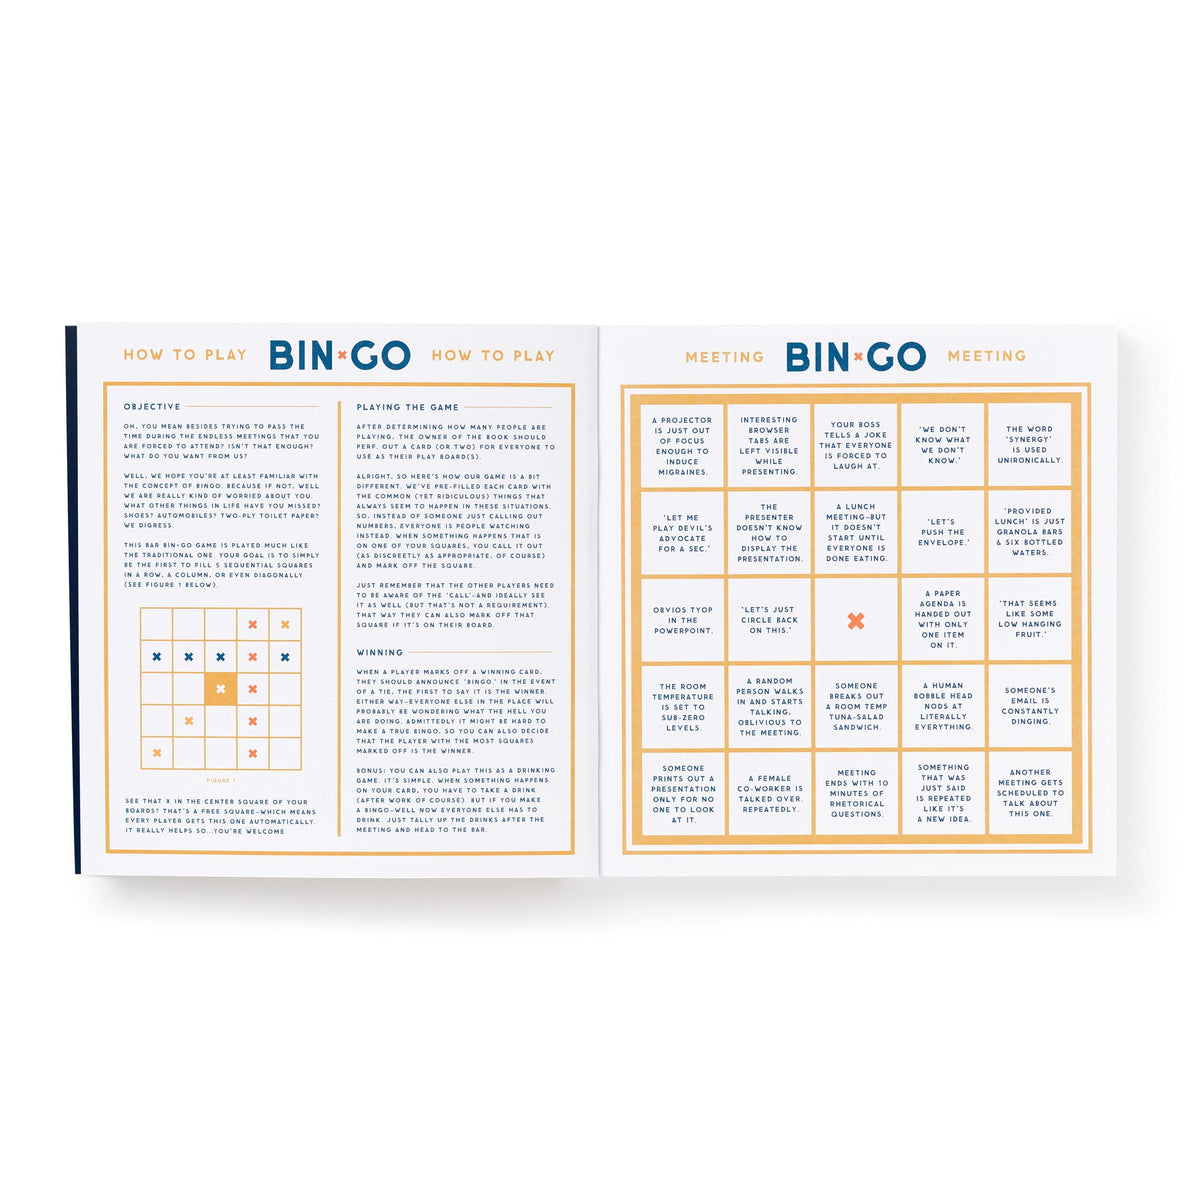 Bin-go To A Dumb Meeting Bingo Book Brass Monkey 